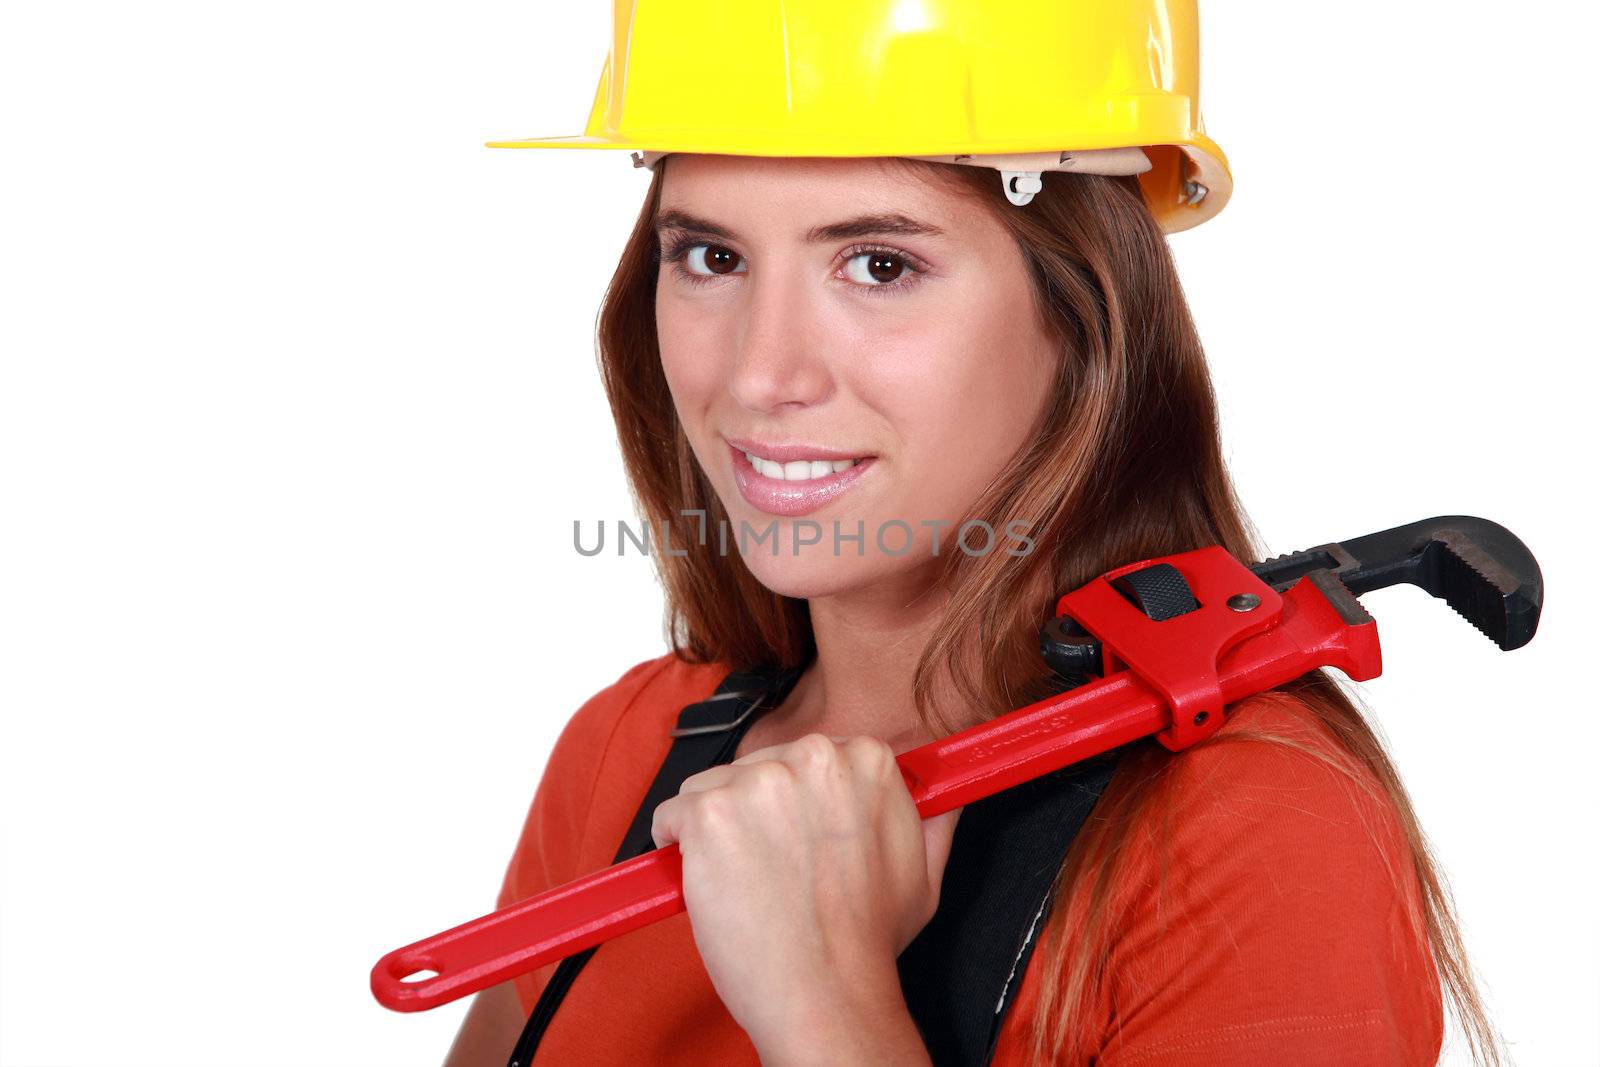 Woman plumber by phovoir